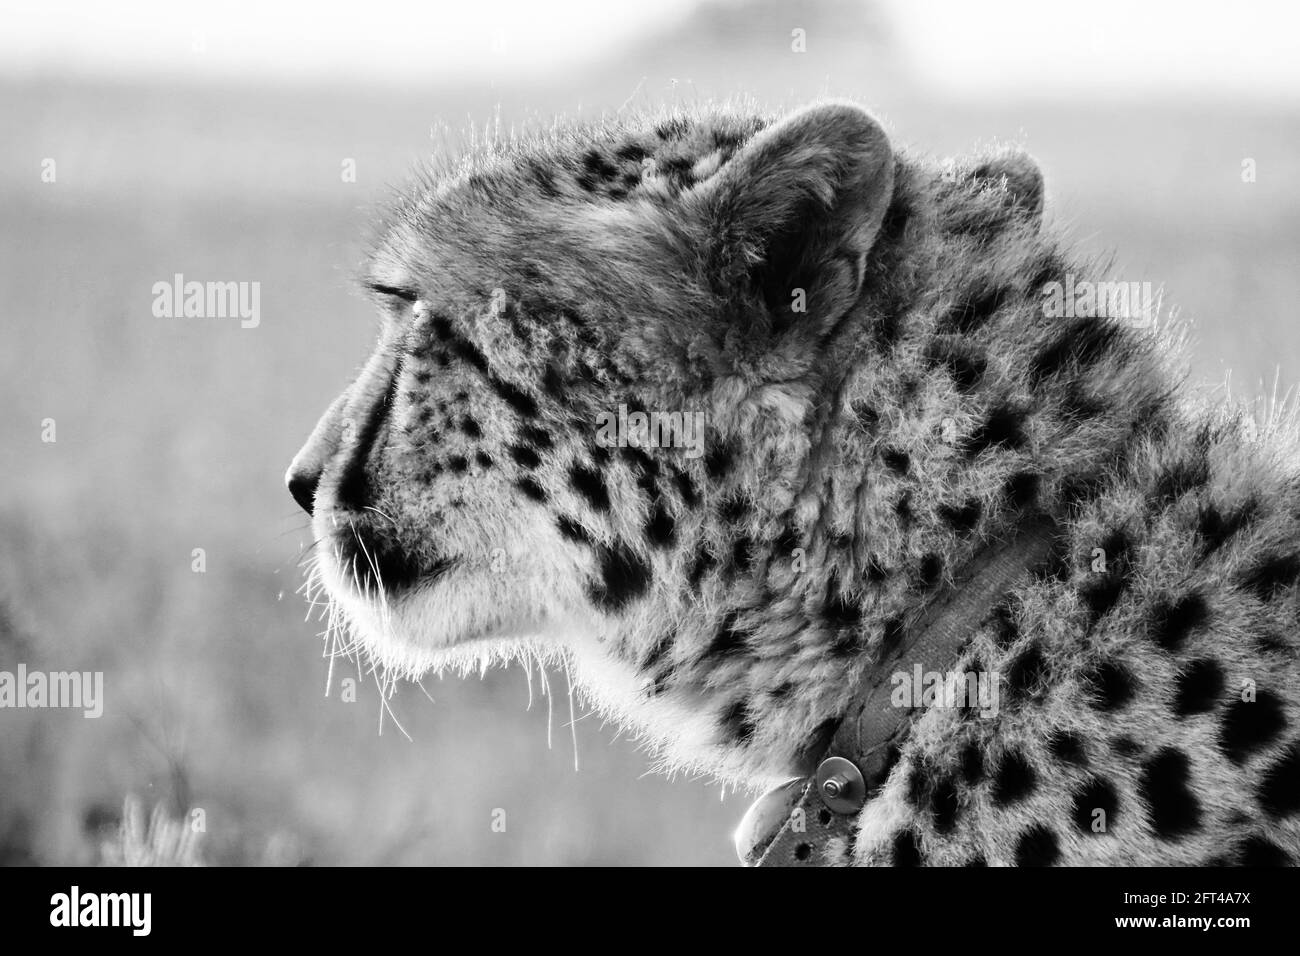 Endangered Female Cheetah in monochrome Stock Photo